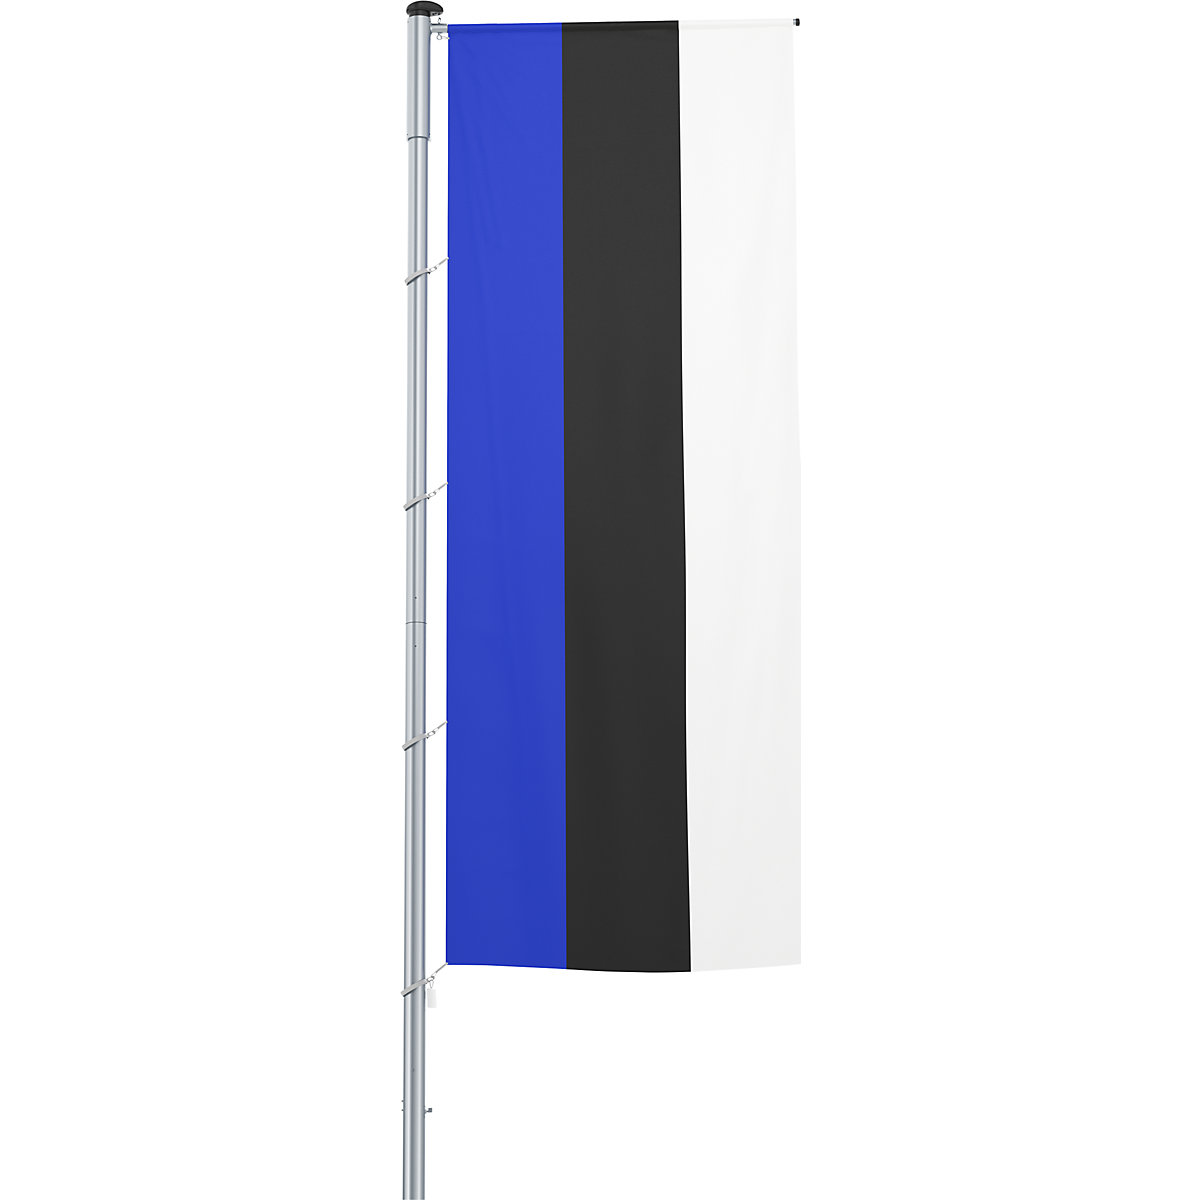 Steag pentru braț/drapel național – Mannus, format 1,2 x 3 m, Estonia-9